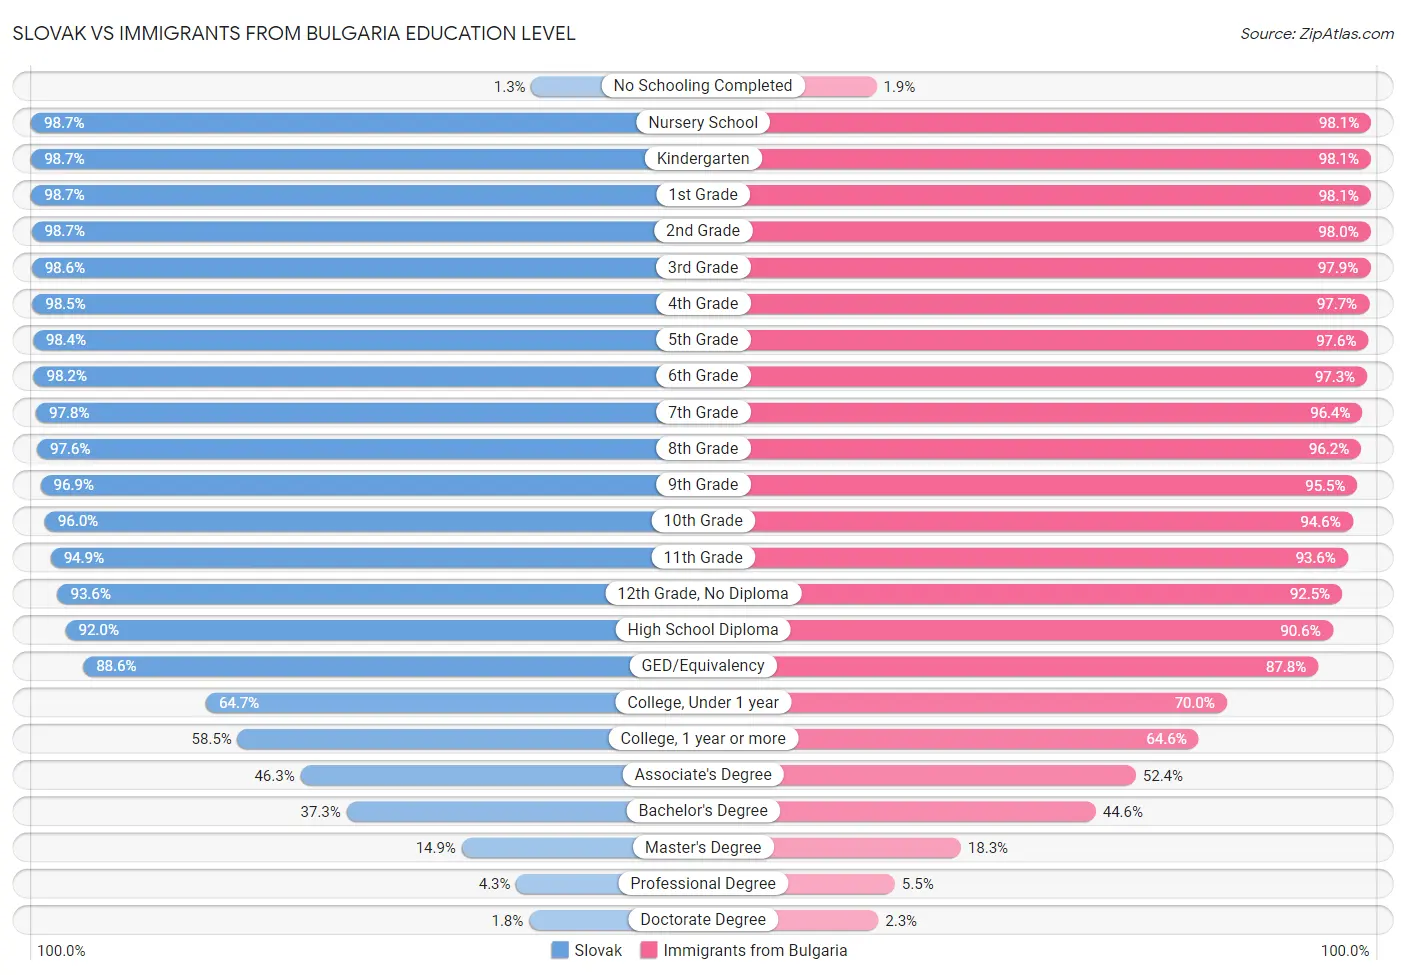 Slovak vs Immigrants from Bulgaria Education Level